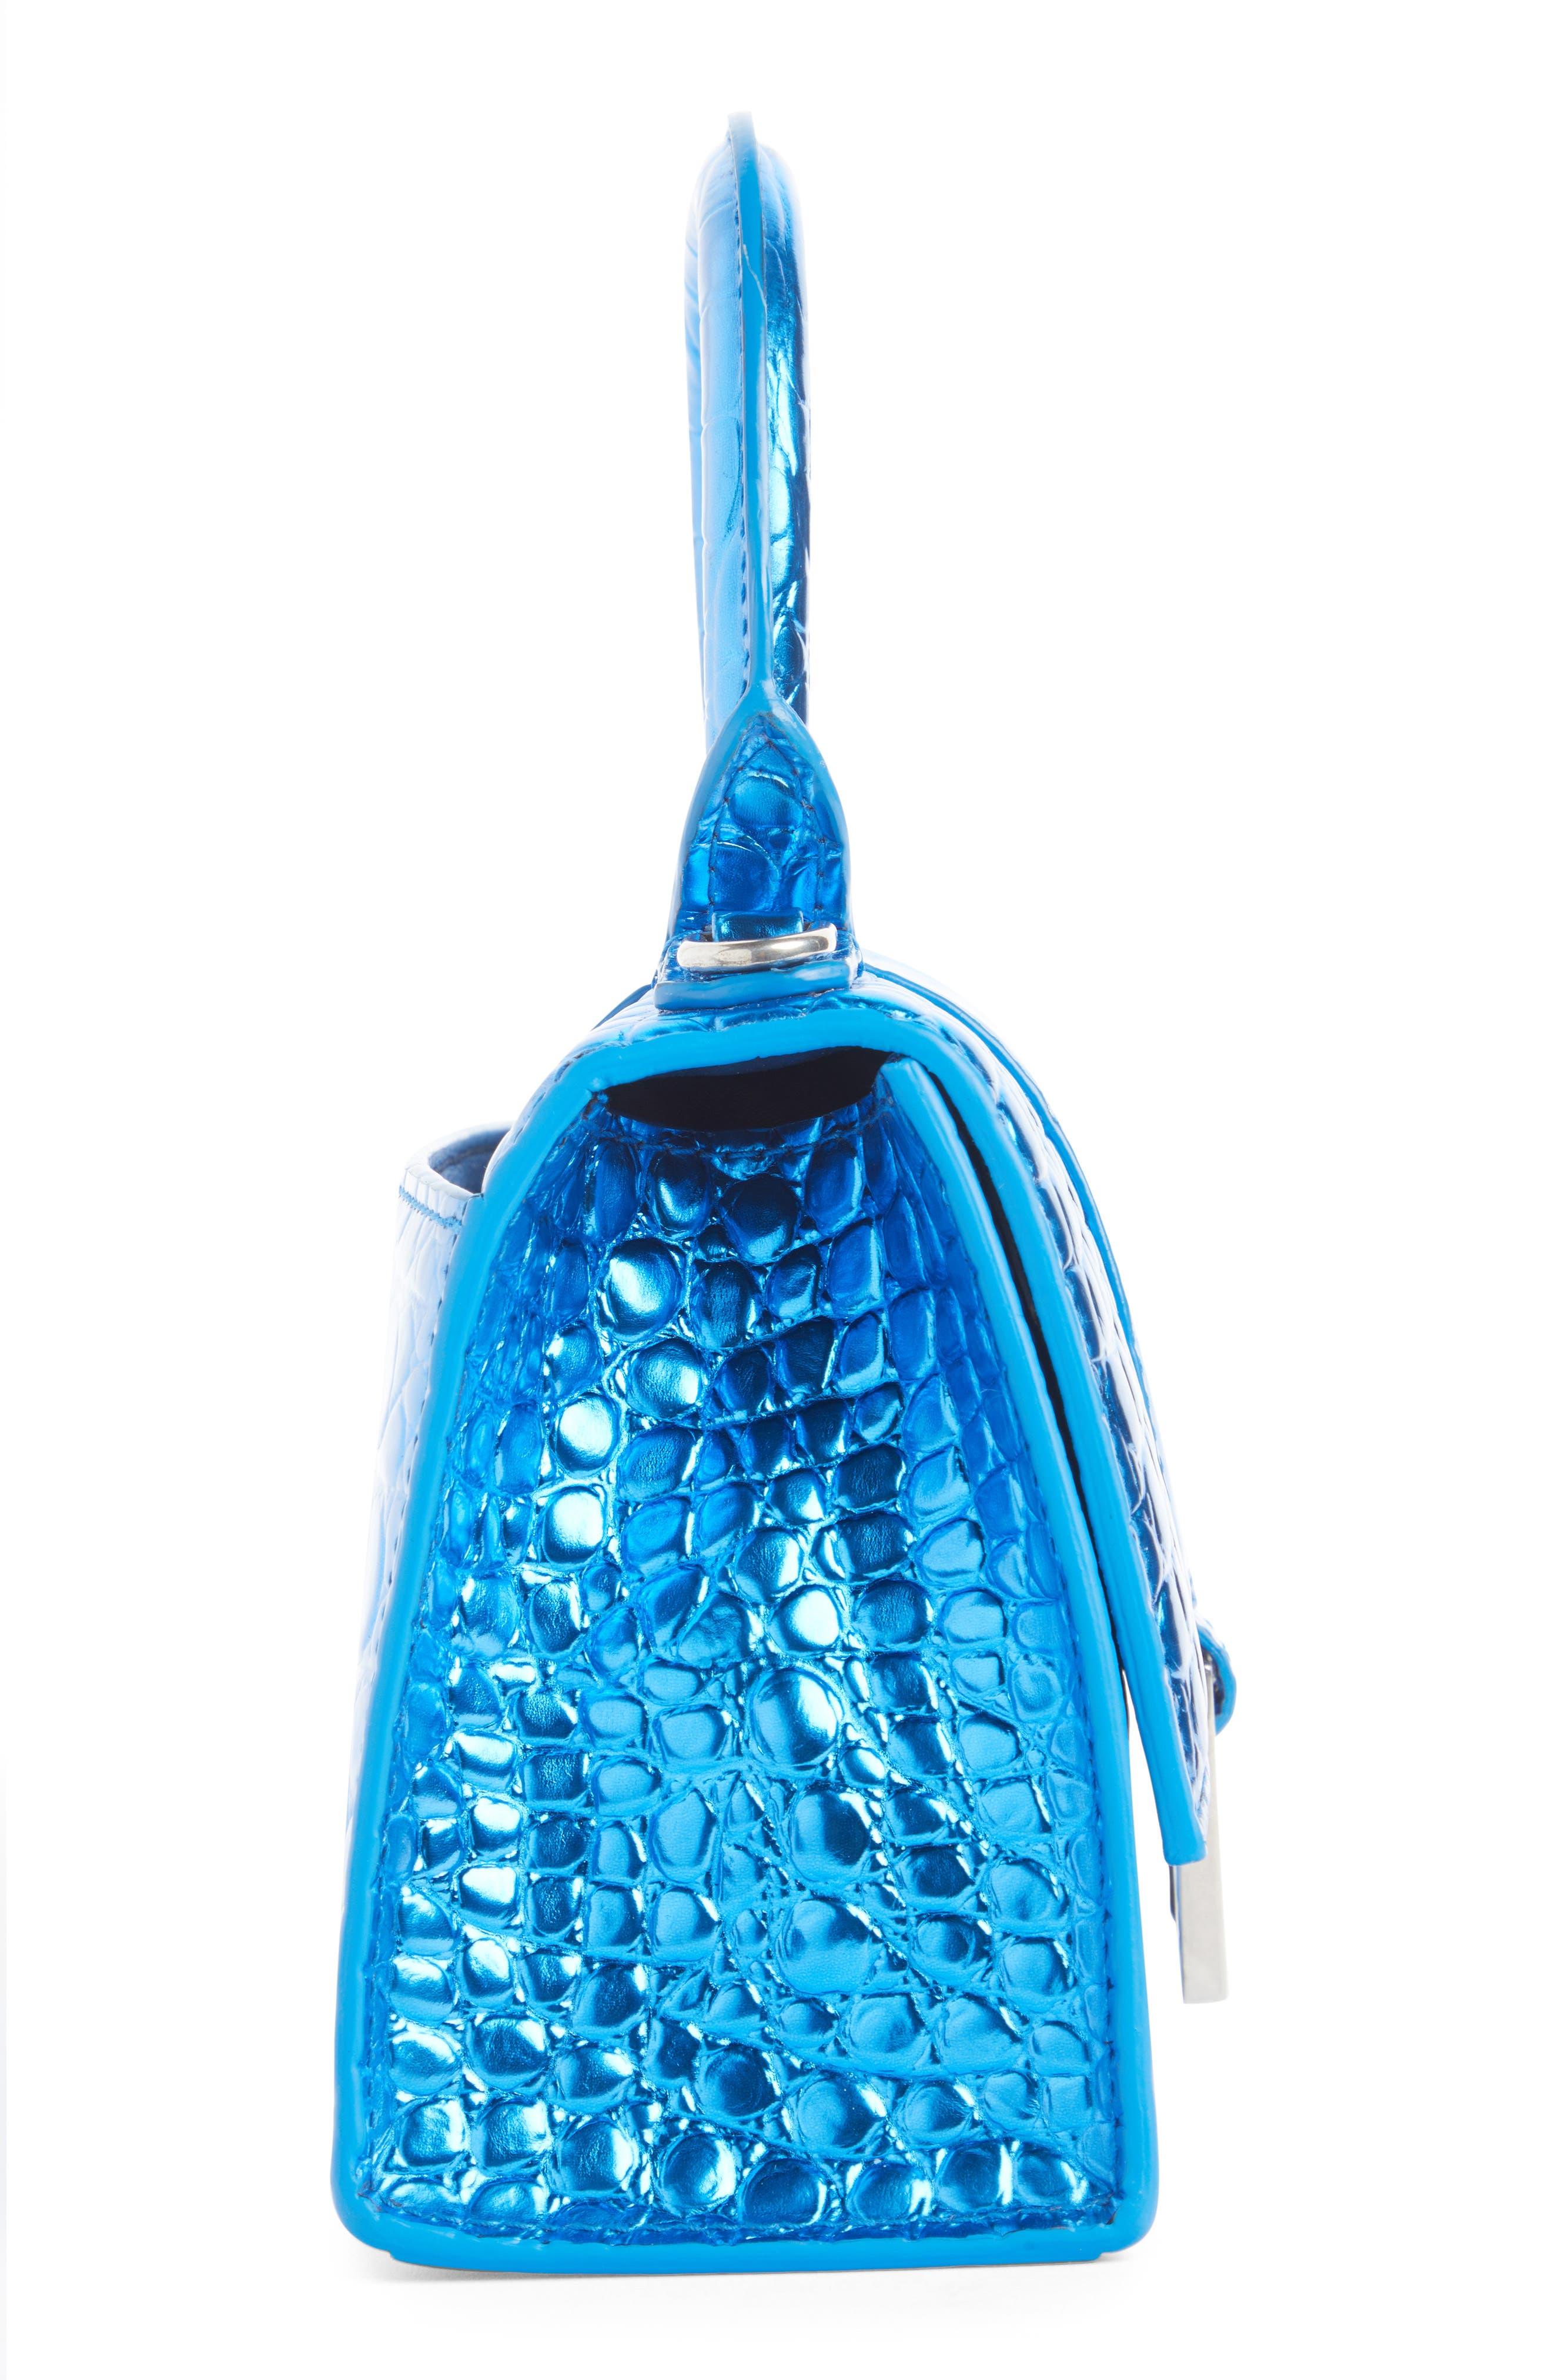 Blue croc embossed balenciaga hourglass bag